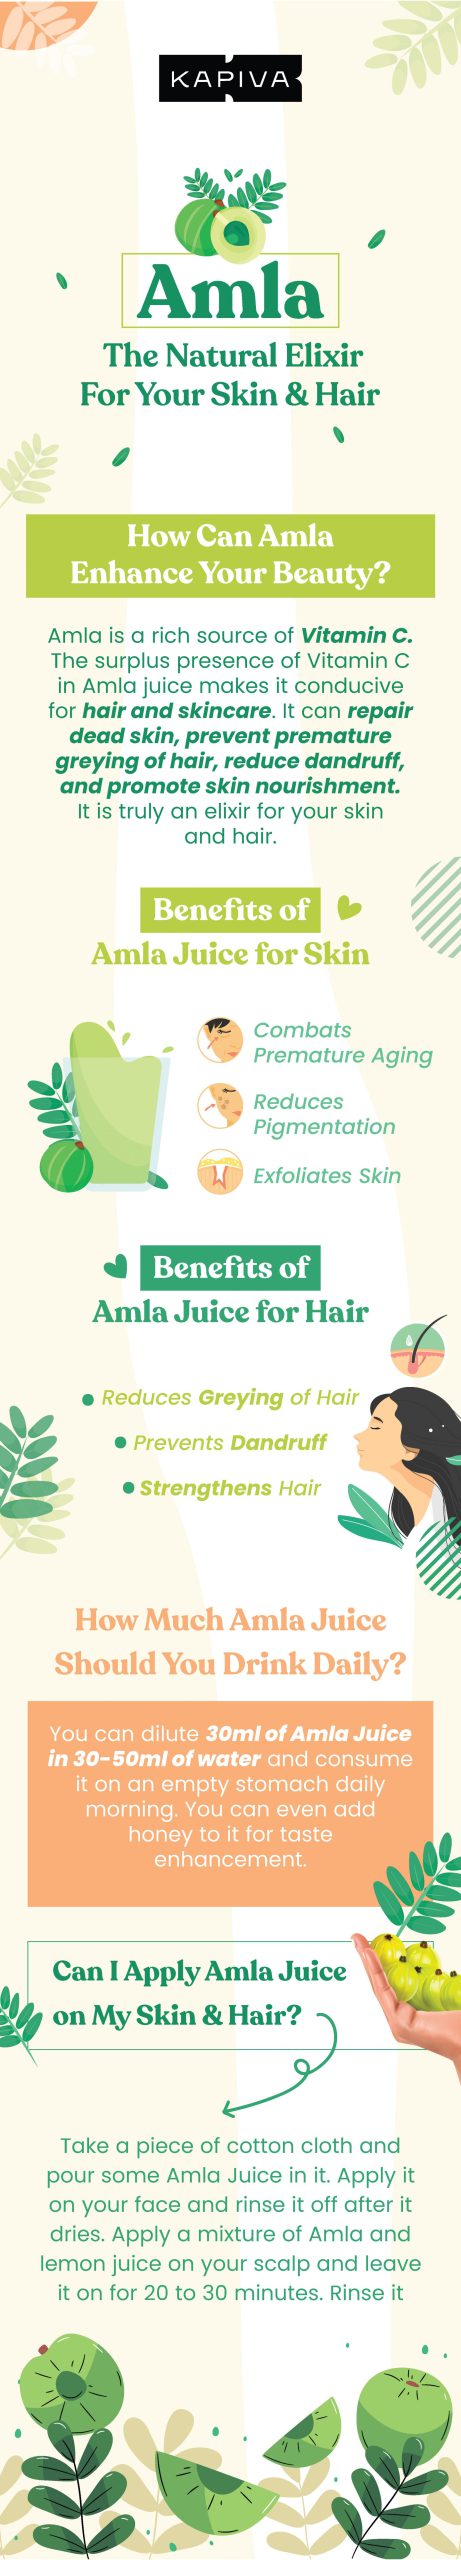 6 Benefits of Amla Juice for Skin and Hair | Kapiva